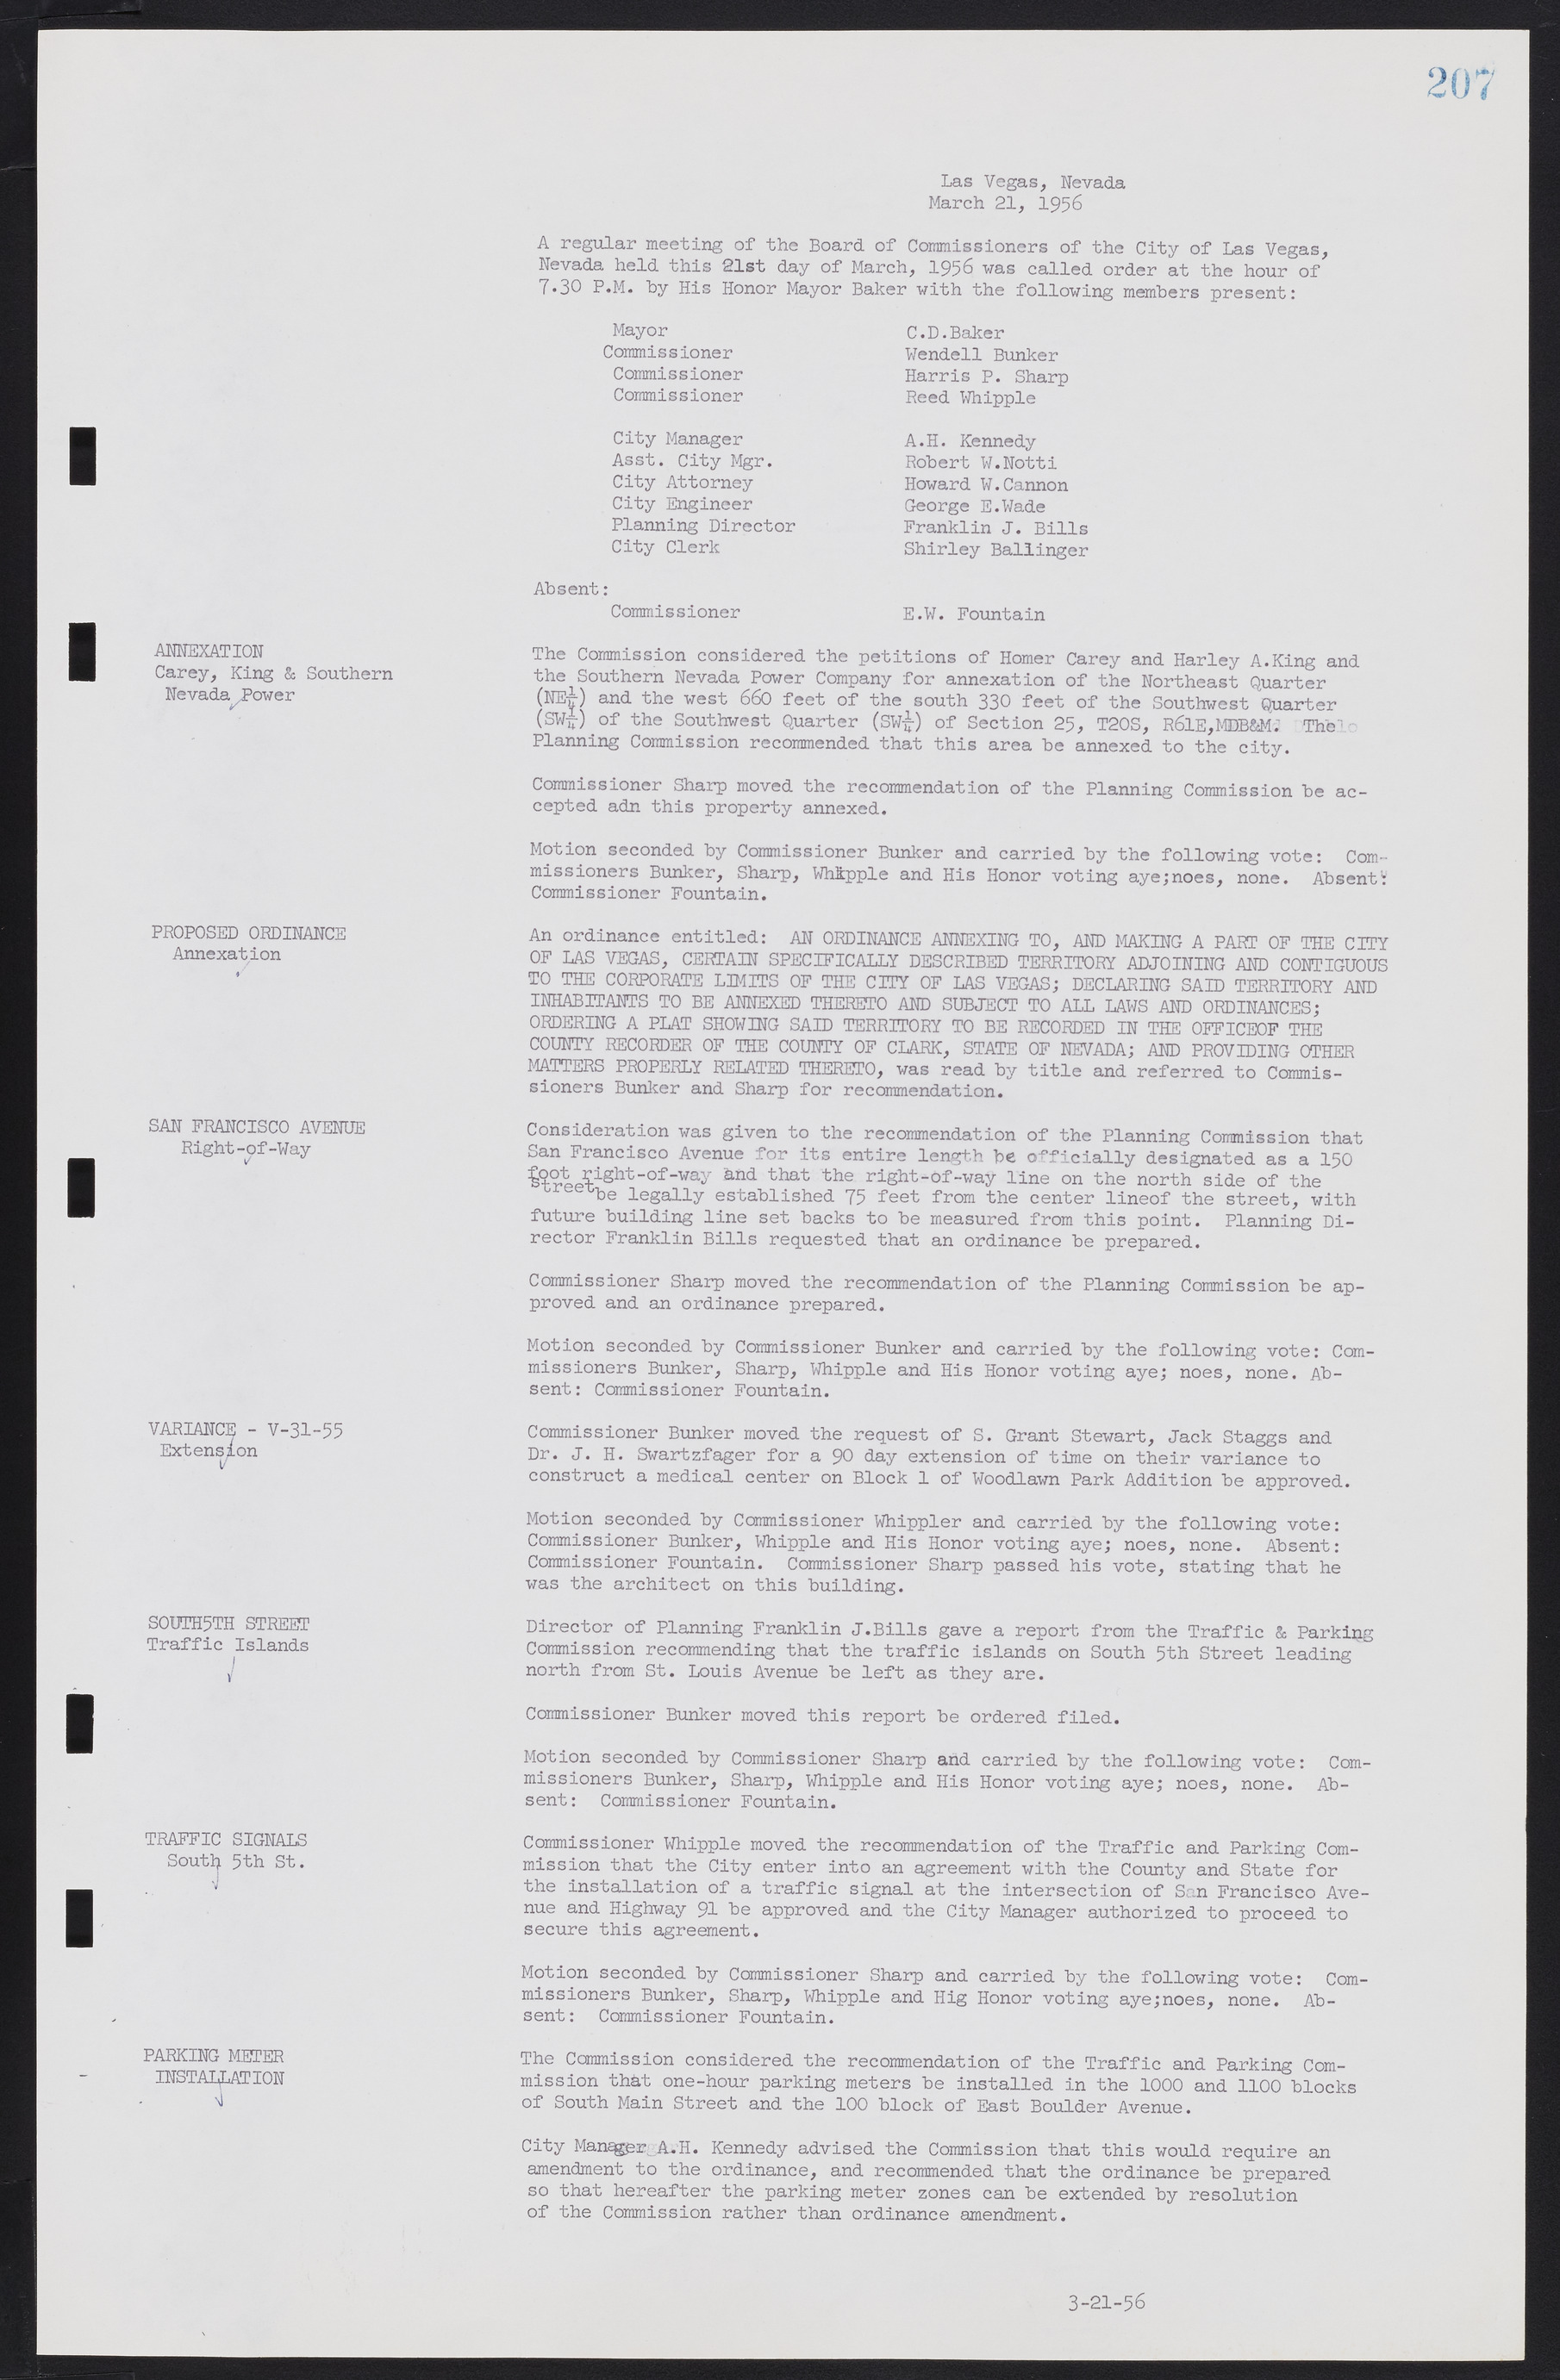 Las Vegas City Commission Minutes, September 21, 1955 to November 20, 1957, lvc000010-225